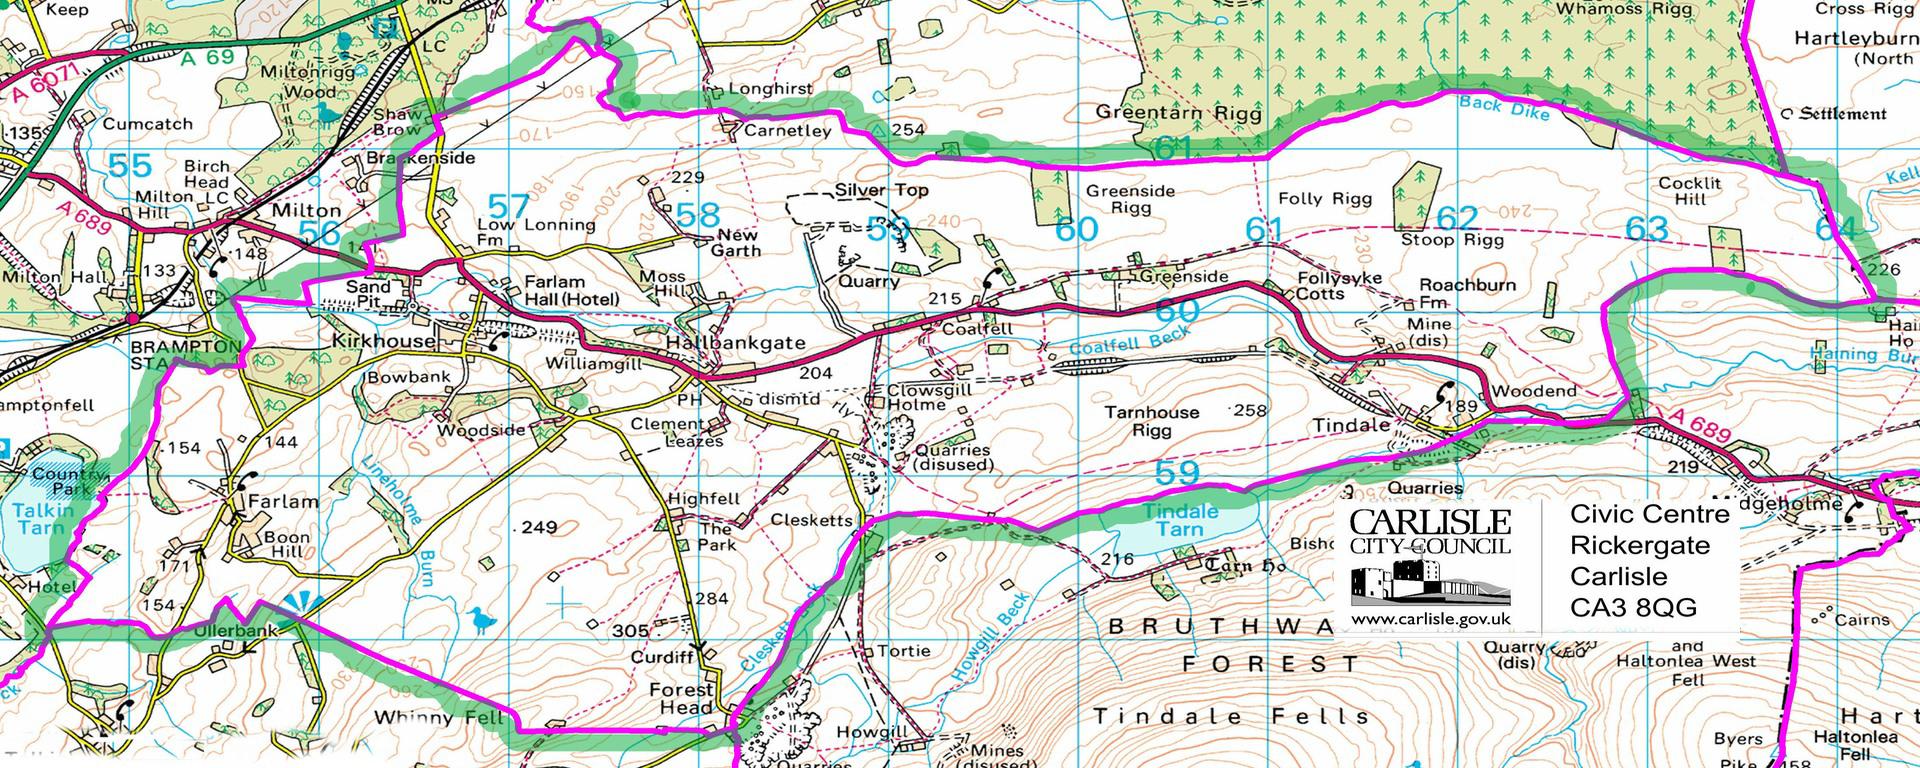 Farlam Parish outline on Ordnance survey map